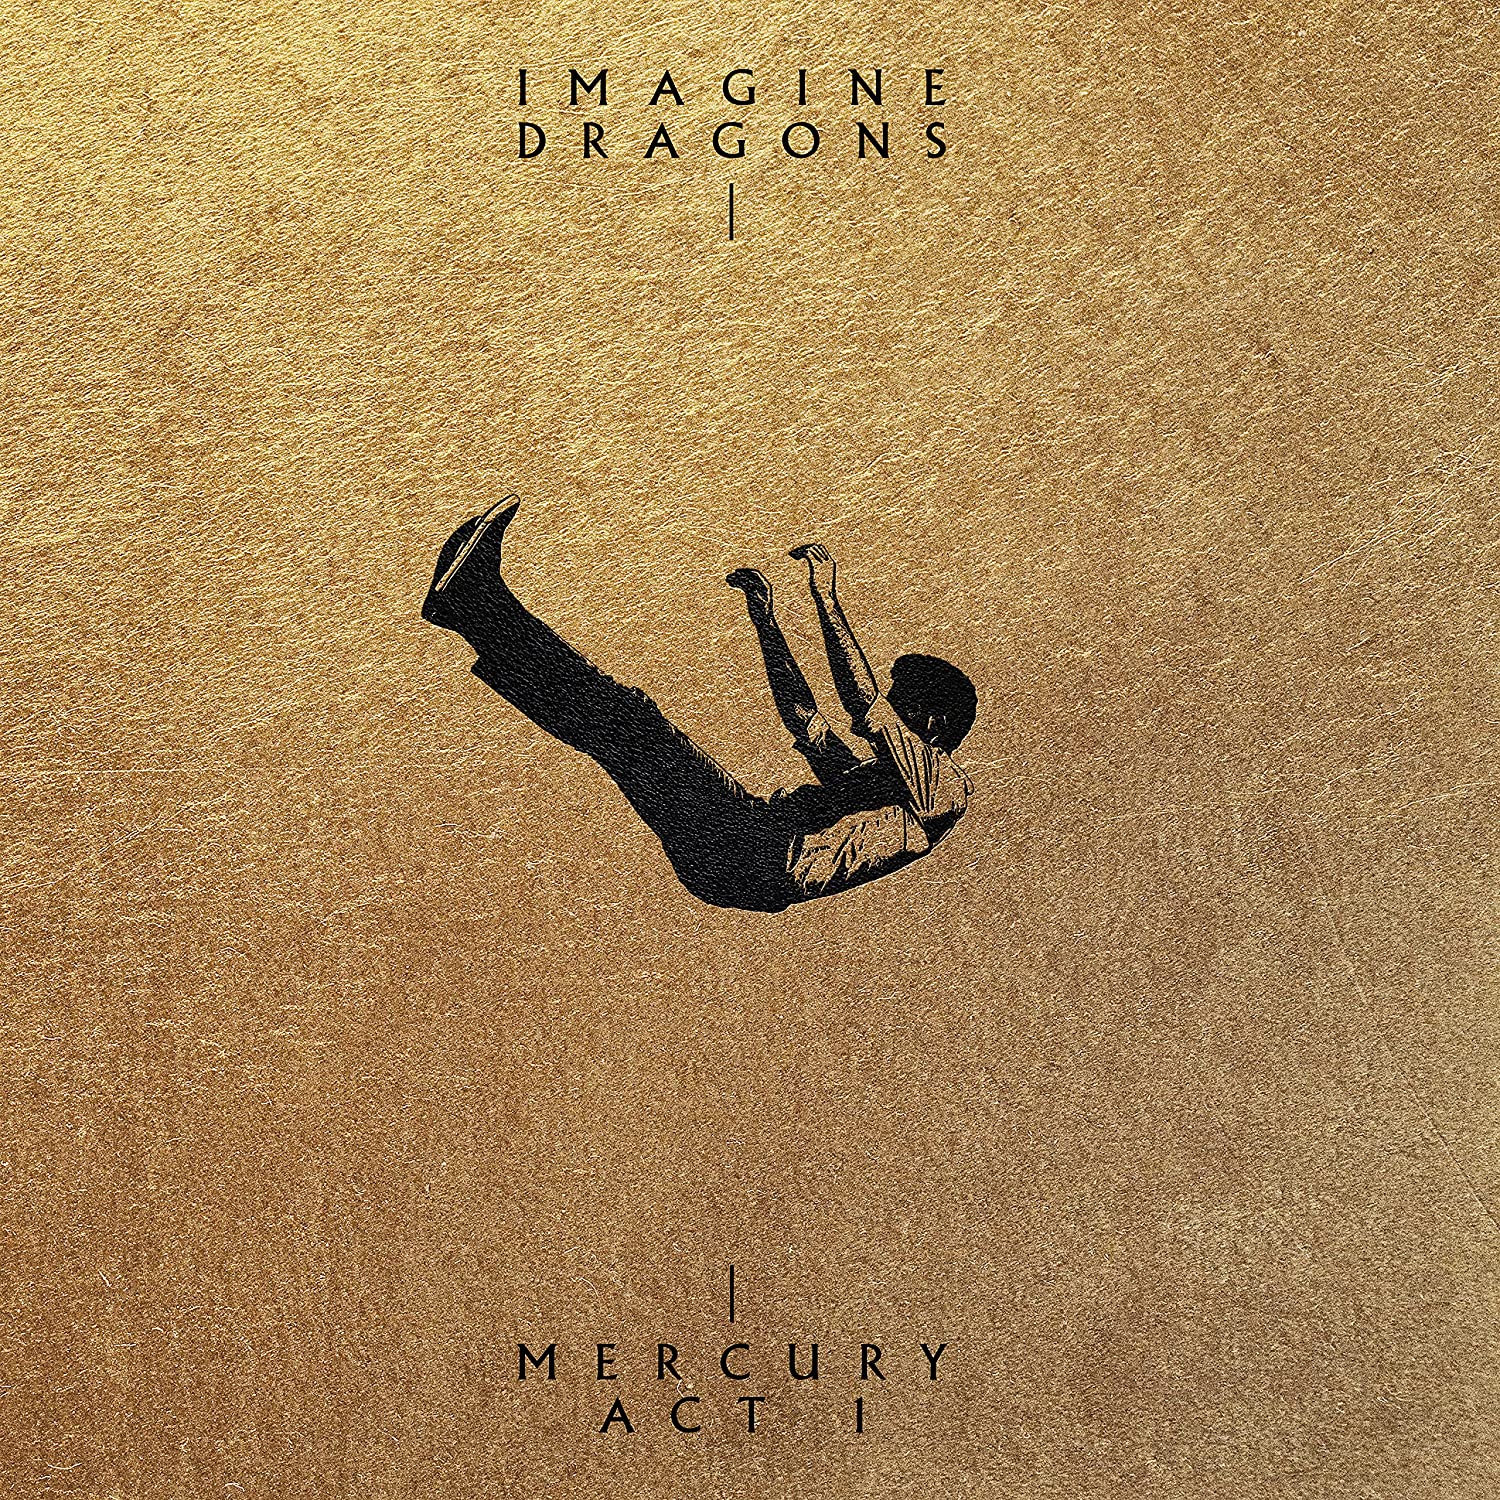 IMAGINE DRAGONS - I MERCURY ACT I Vinyl LP